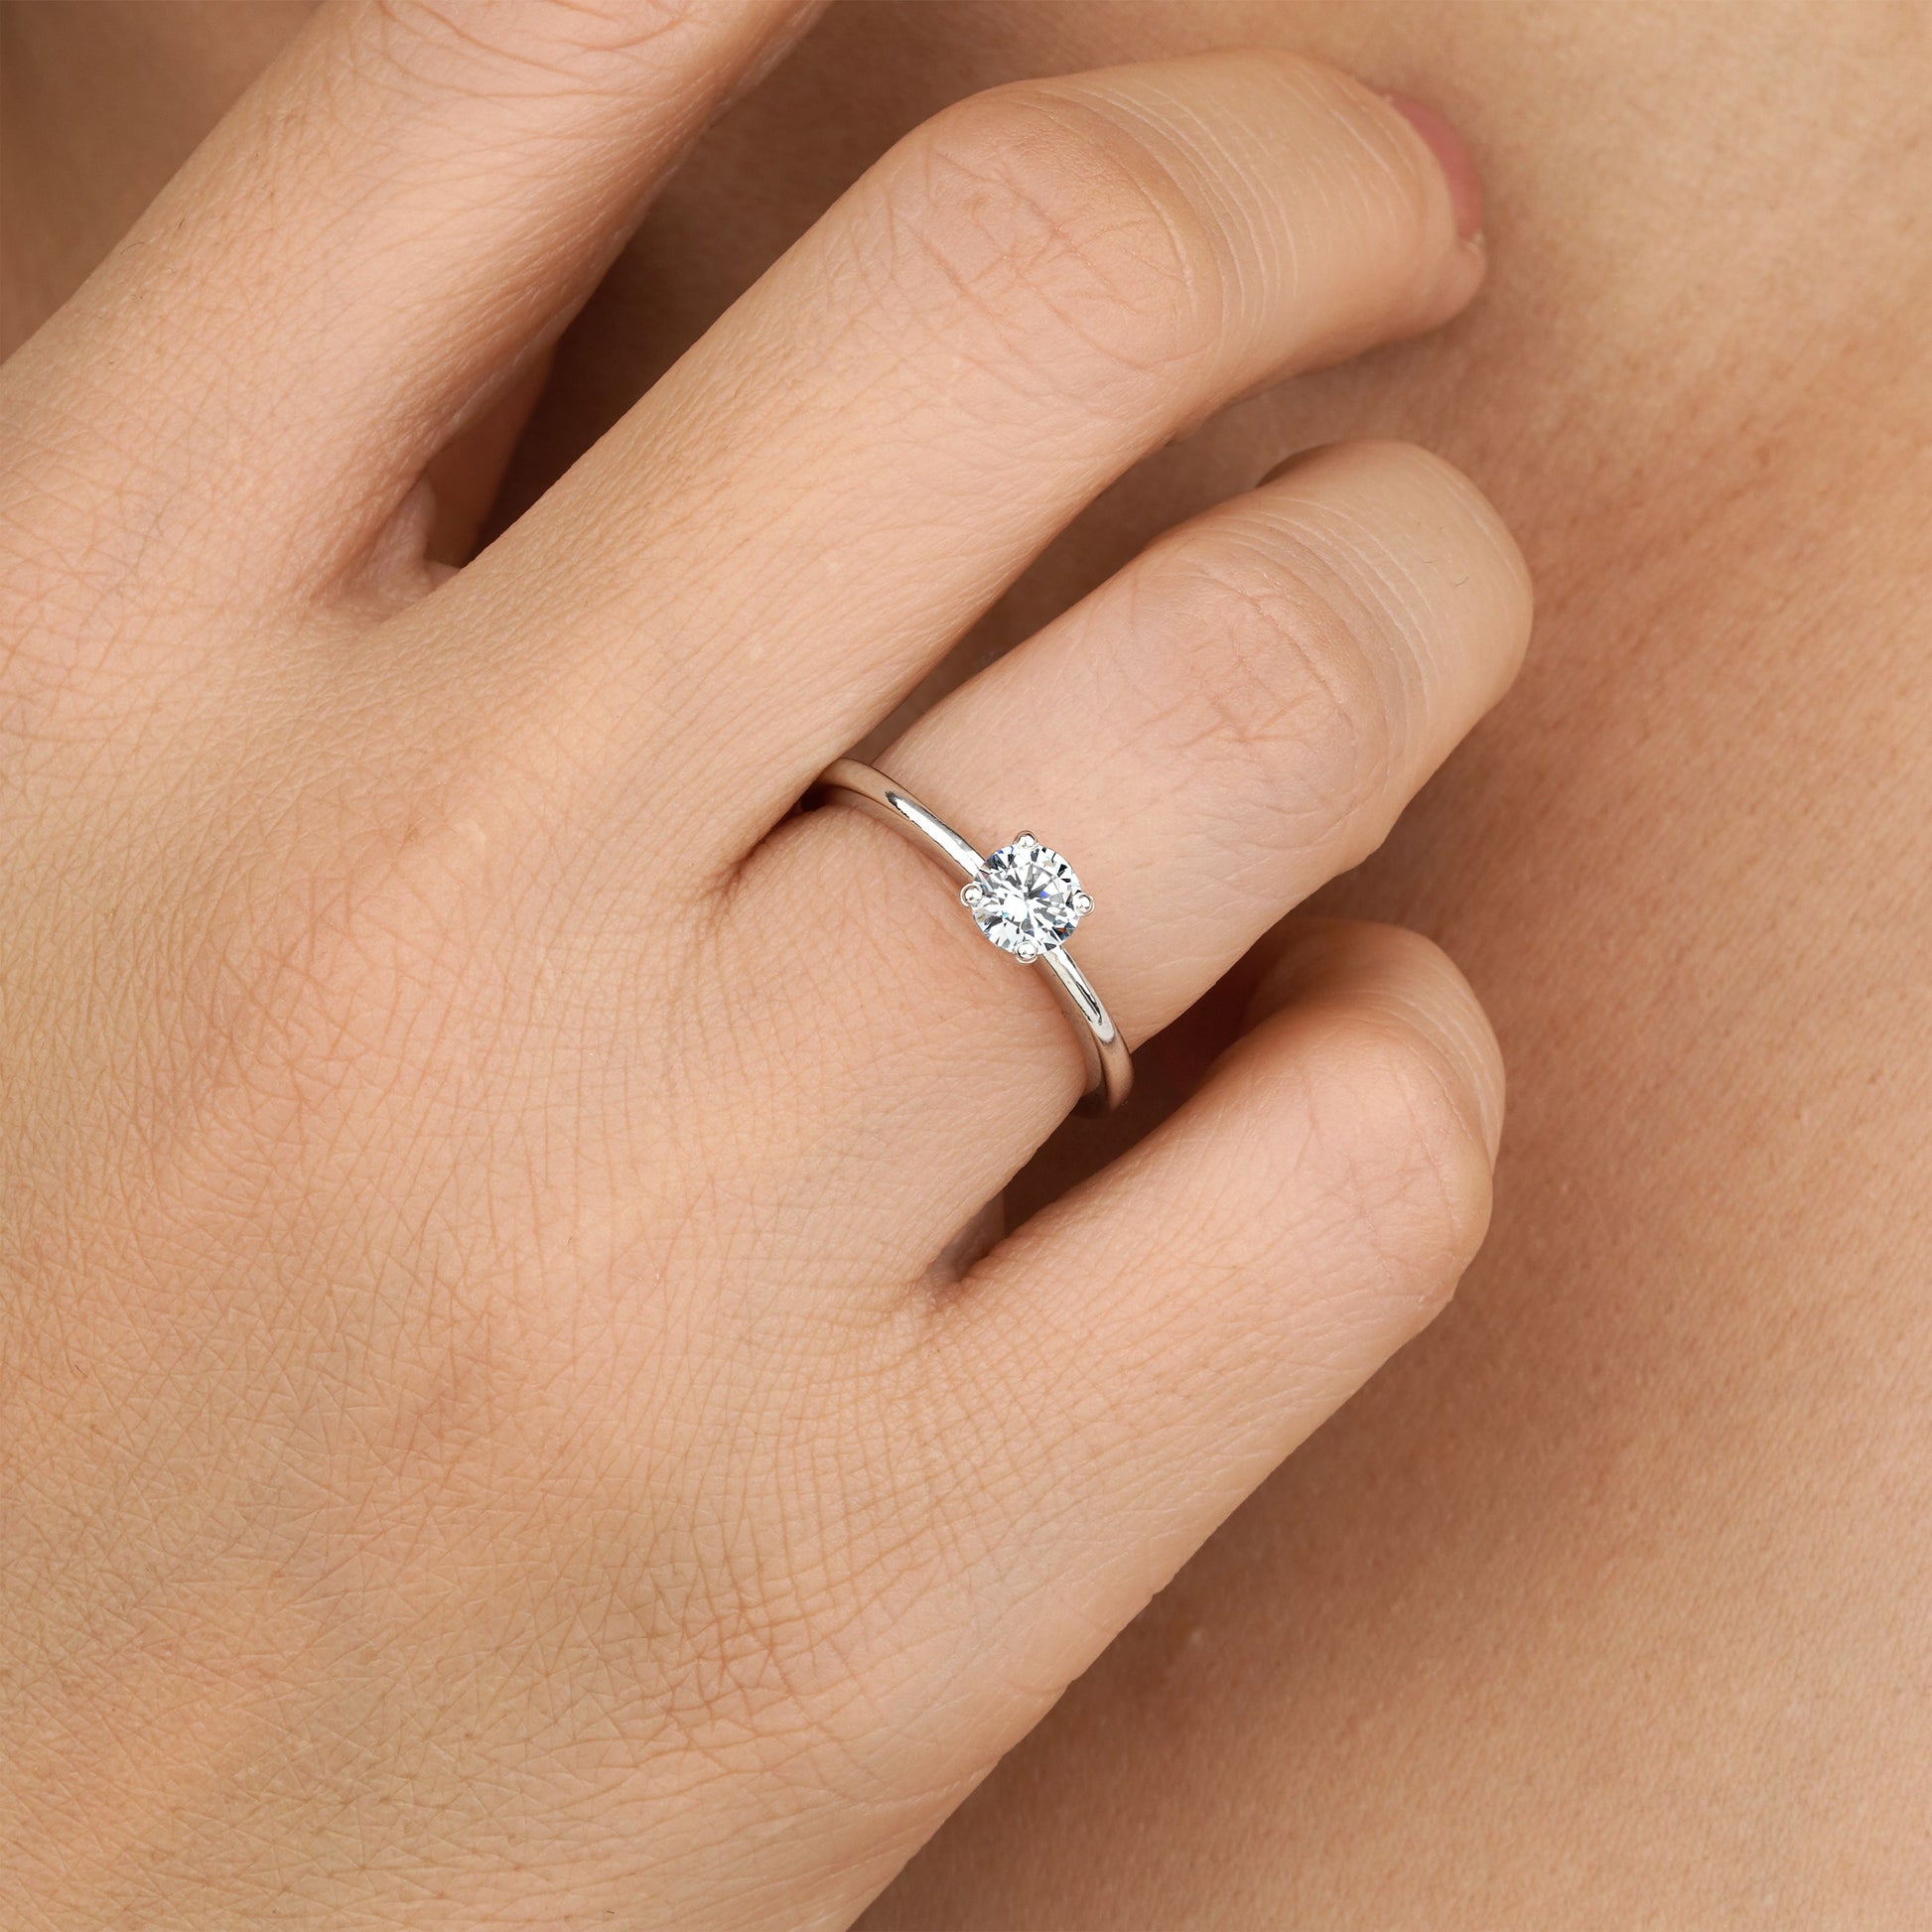 Round moissanite engagement ring